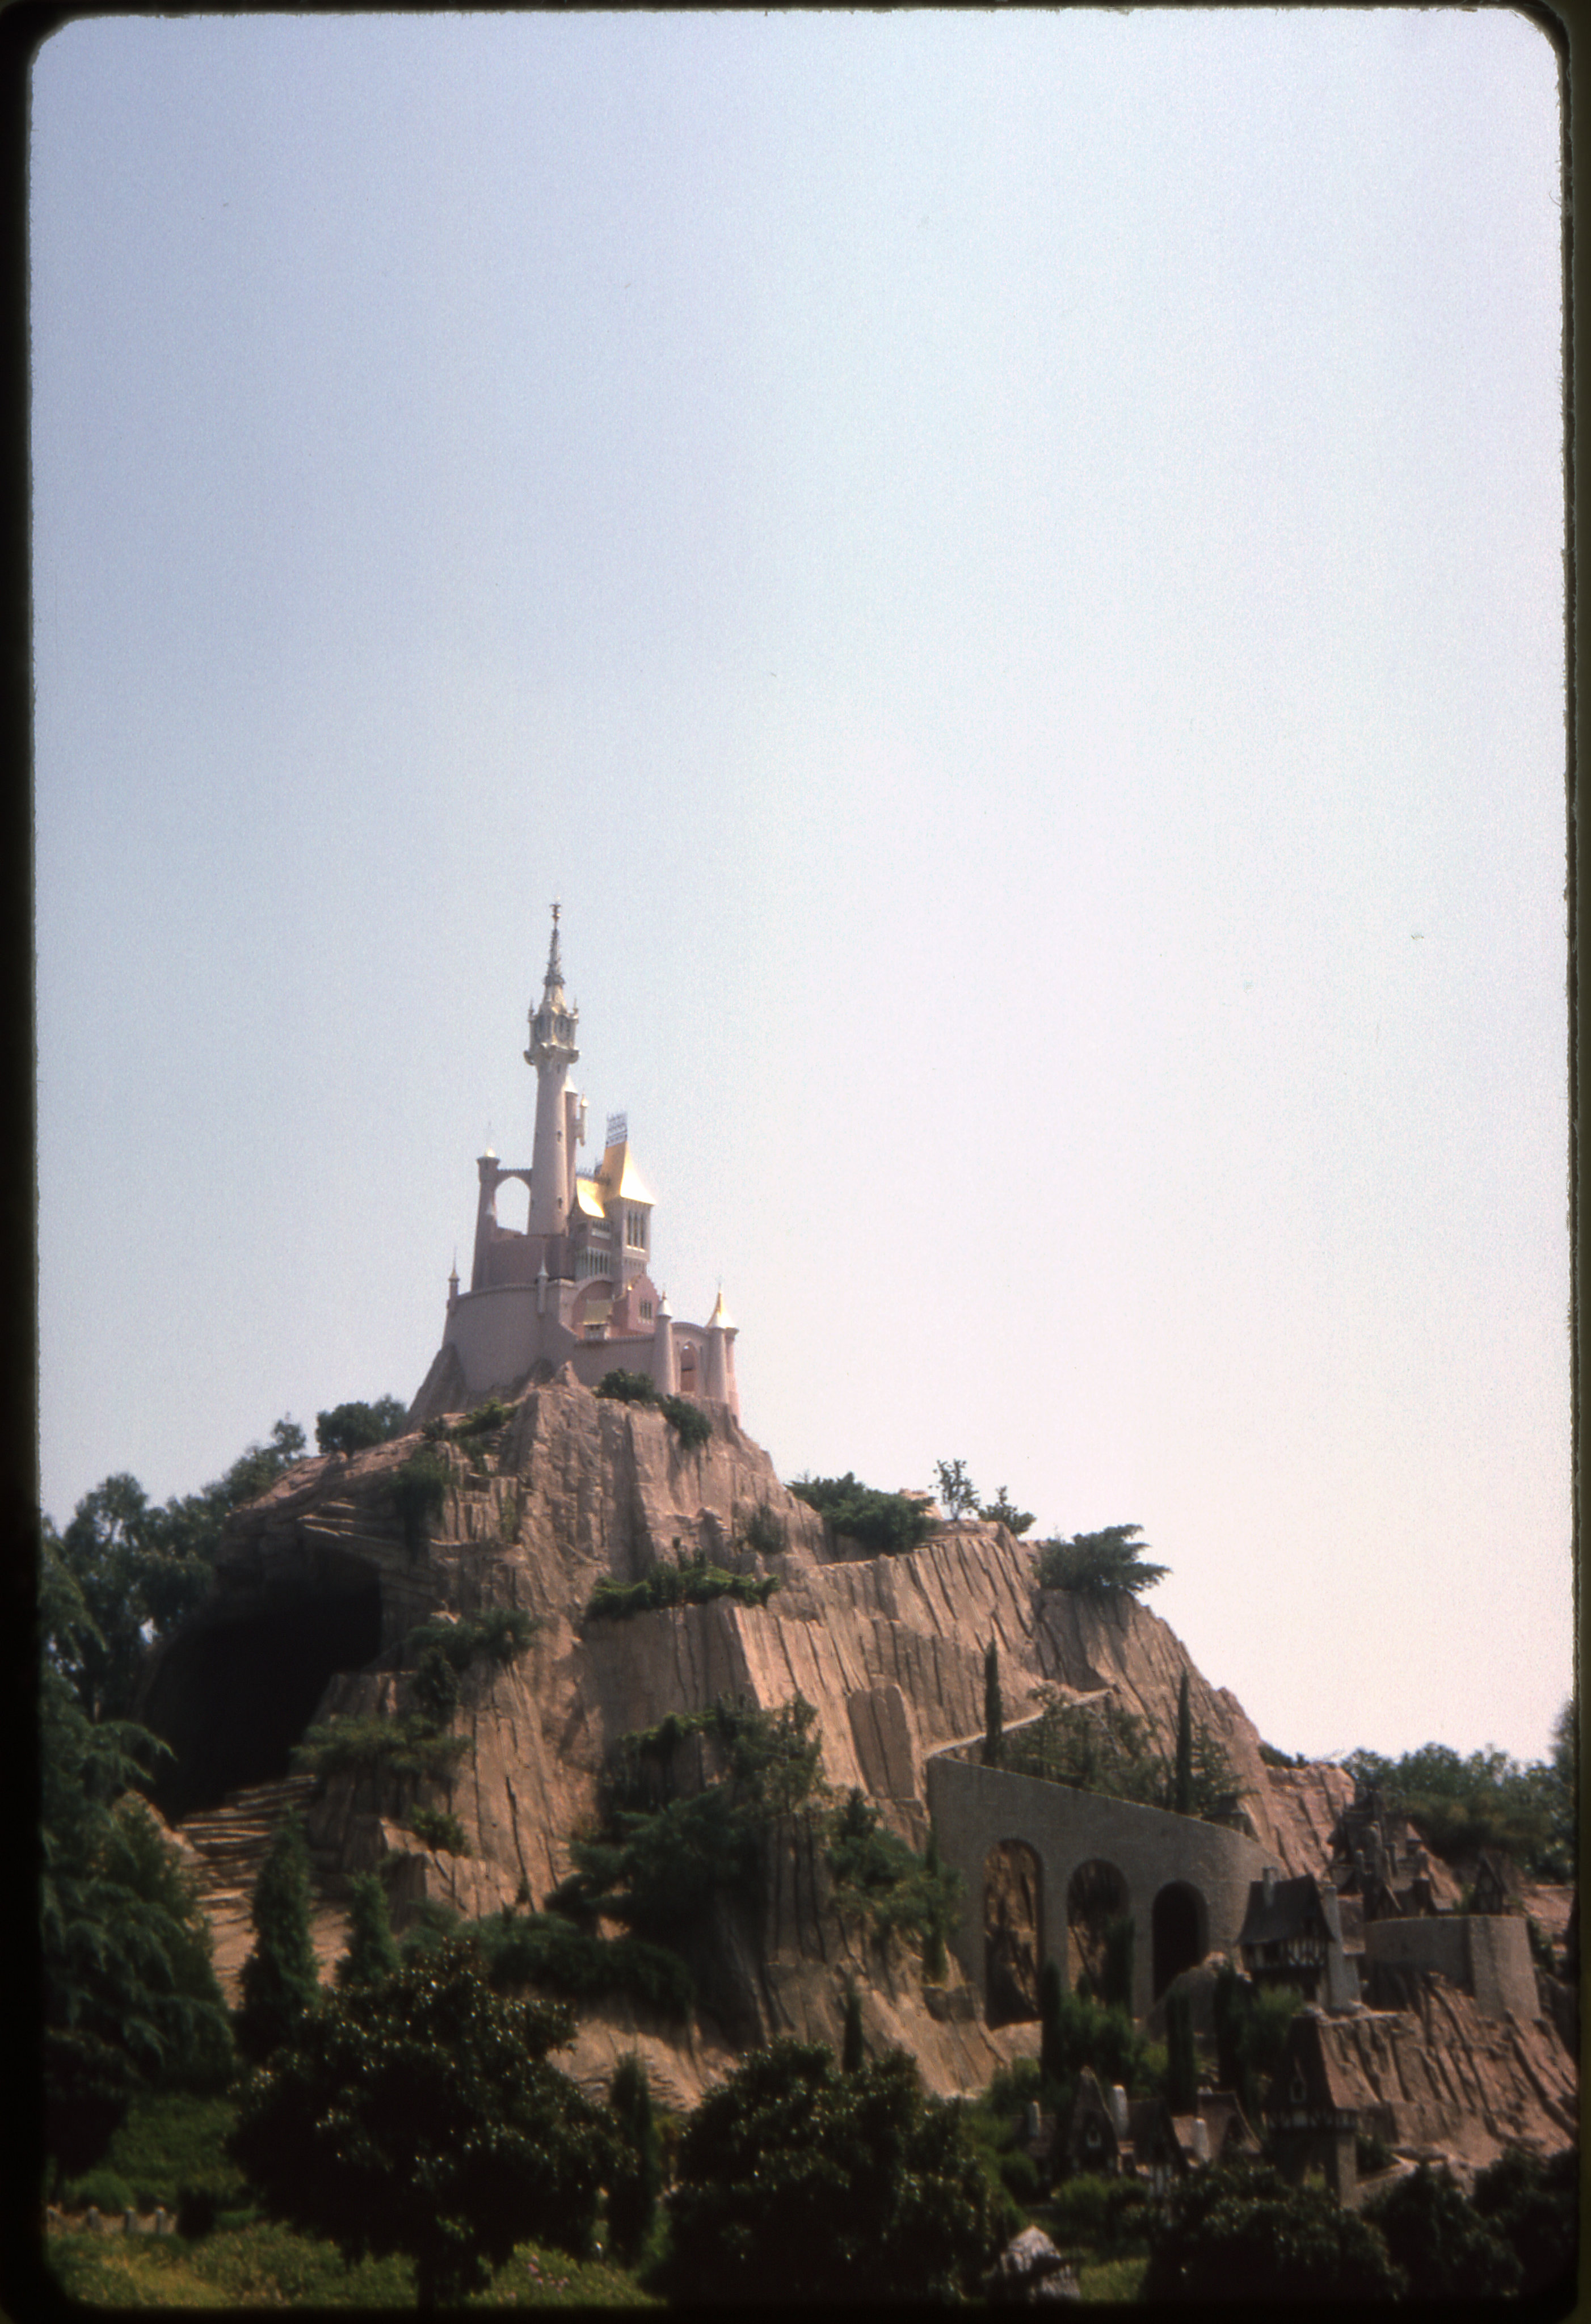 Storybookland, Disneyland, 1962. Source: J E on Flickr.